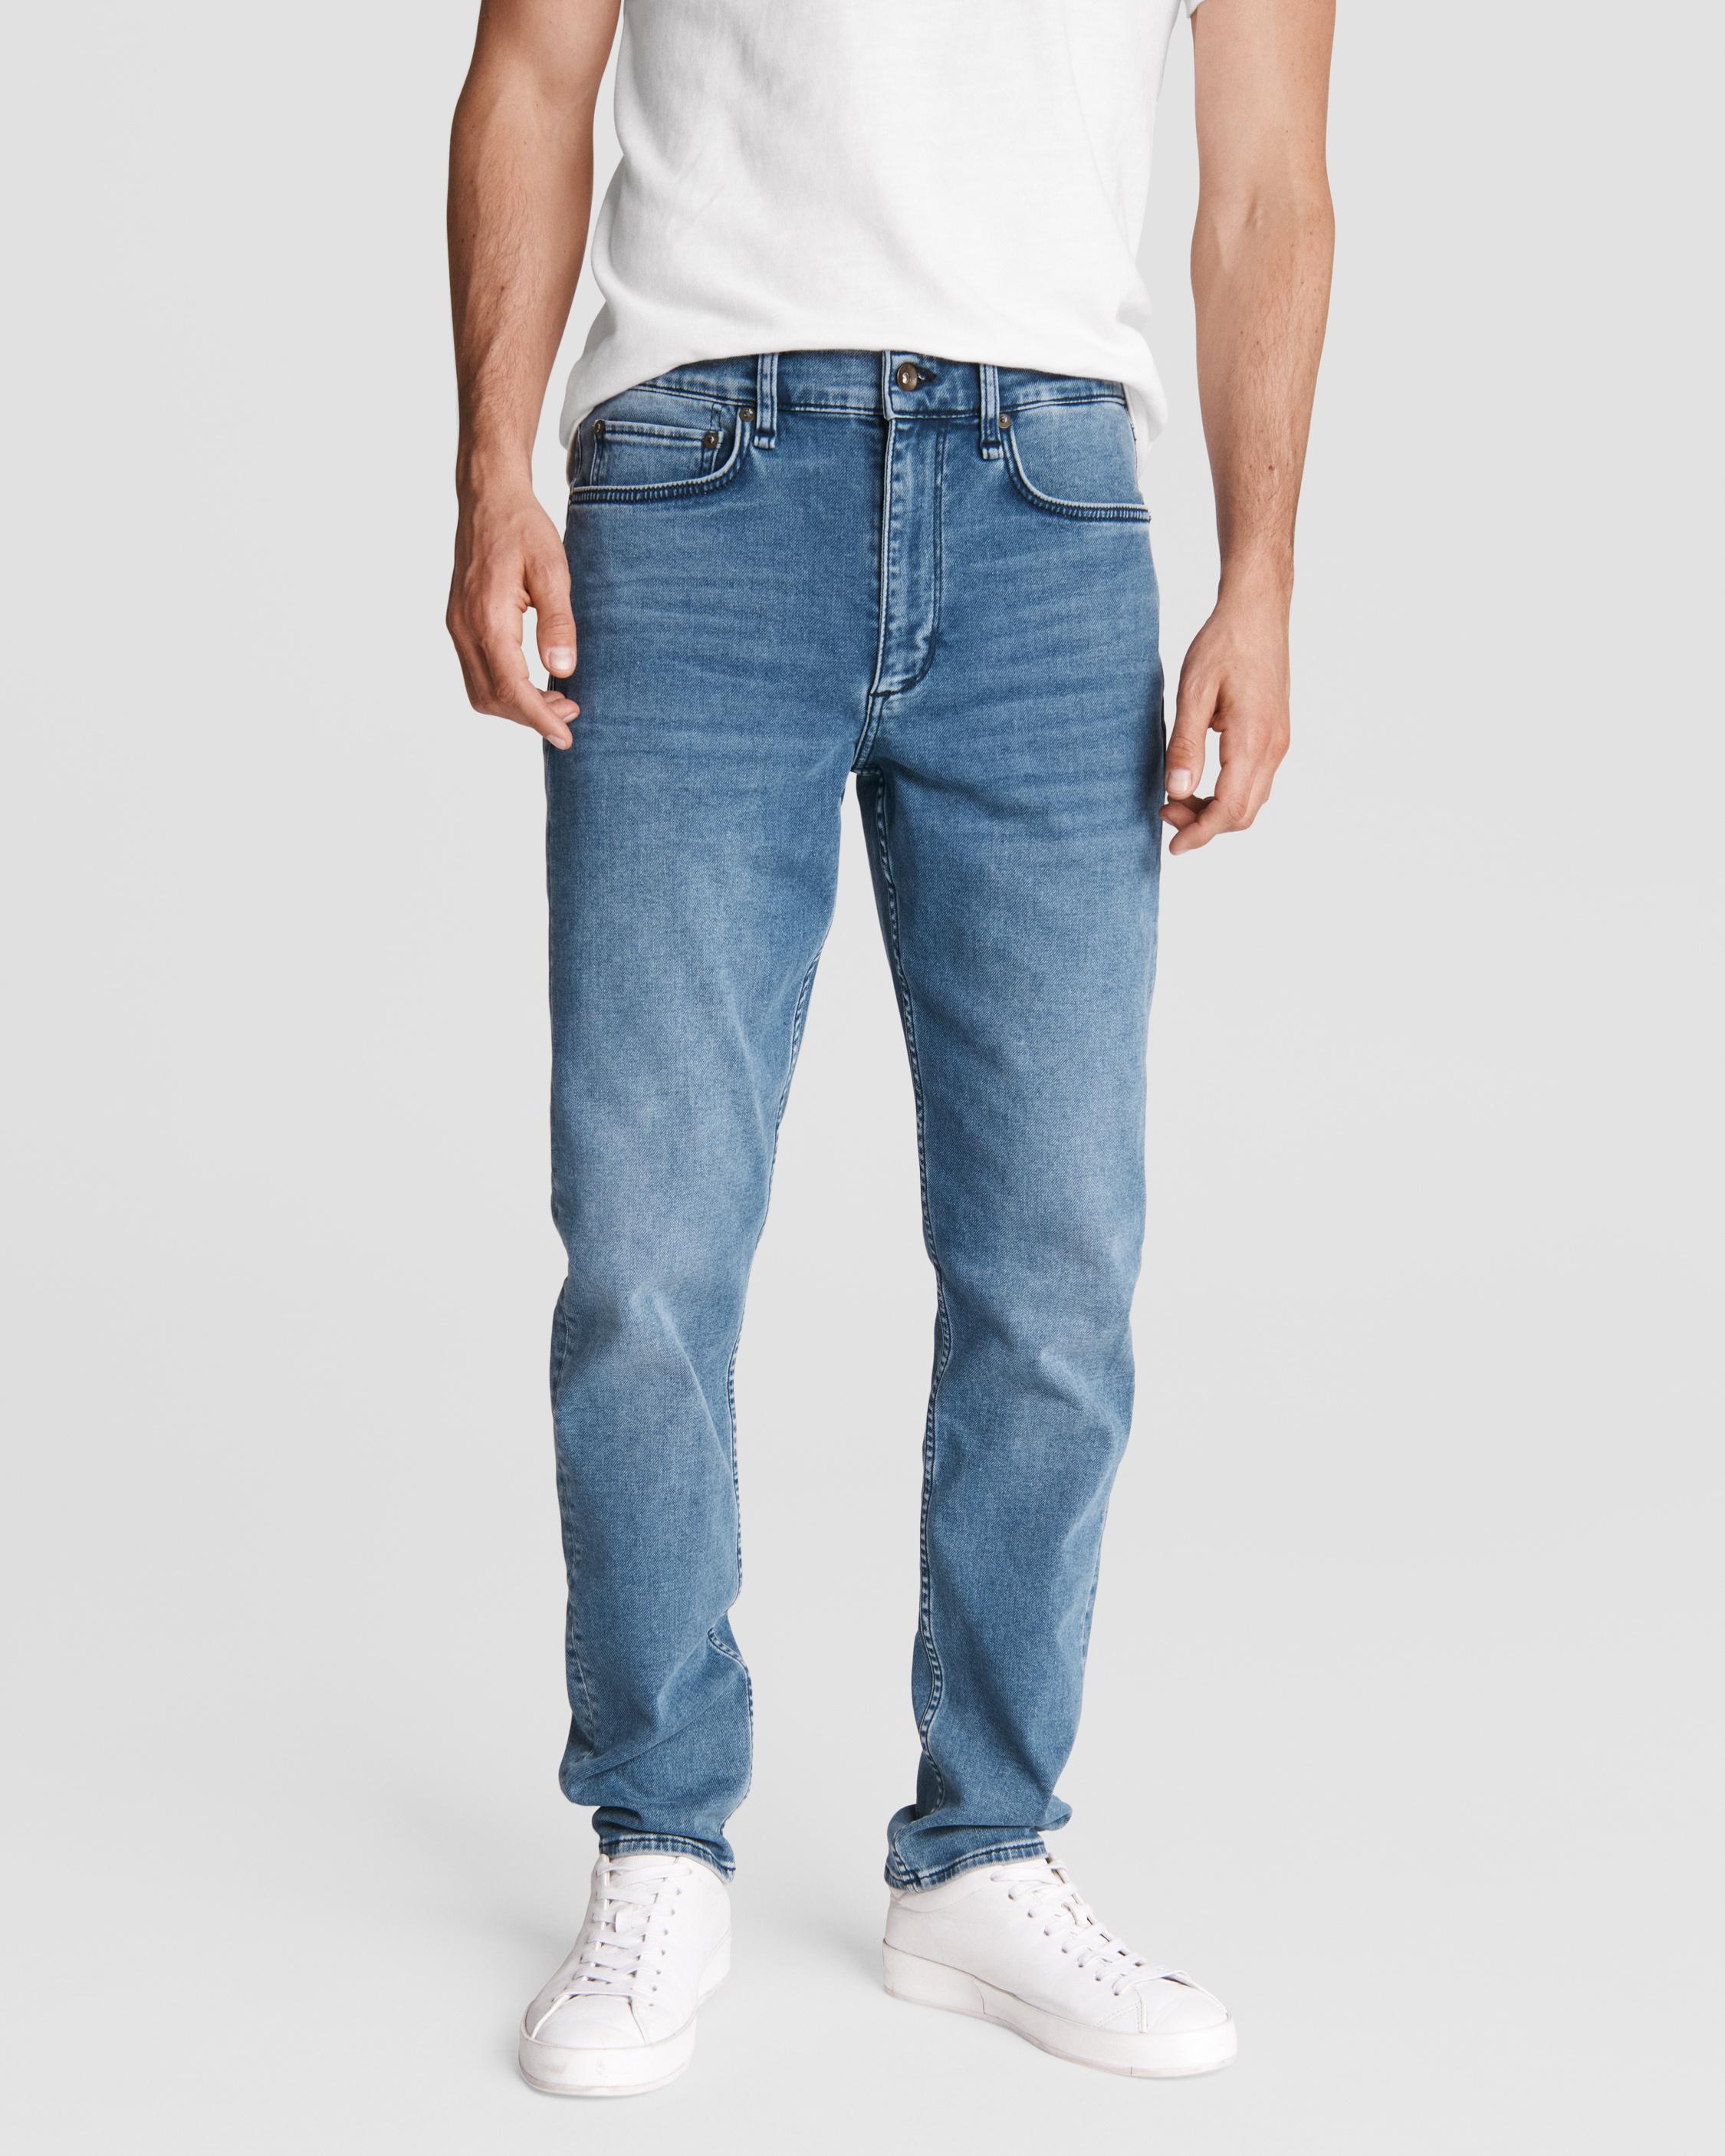 Shop Men's Jeans Sale Up to 60% Off | rag & bone